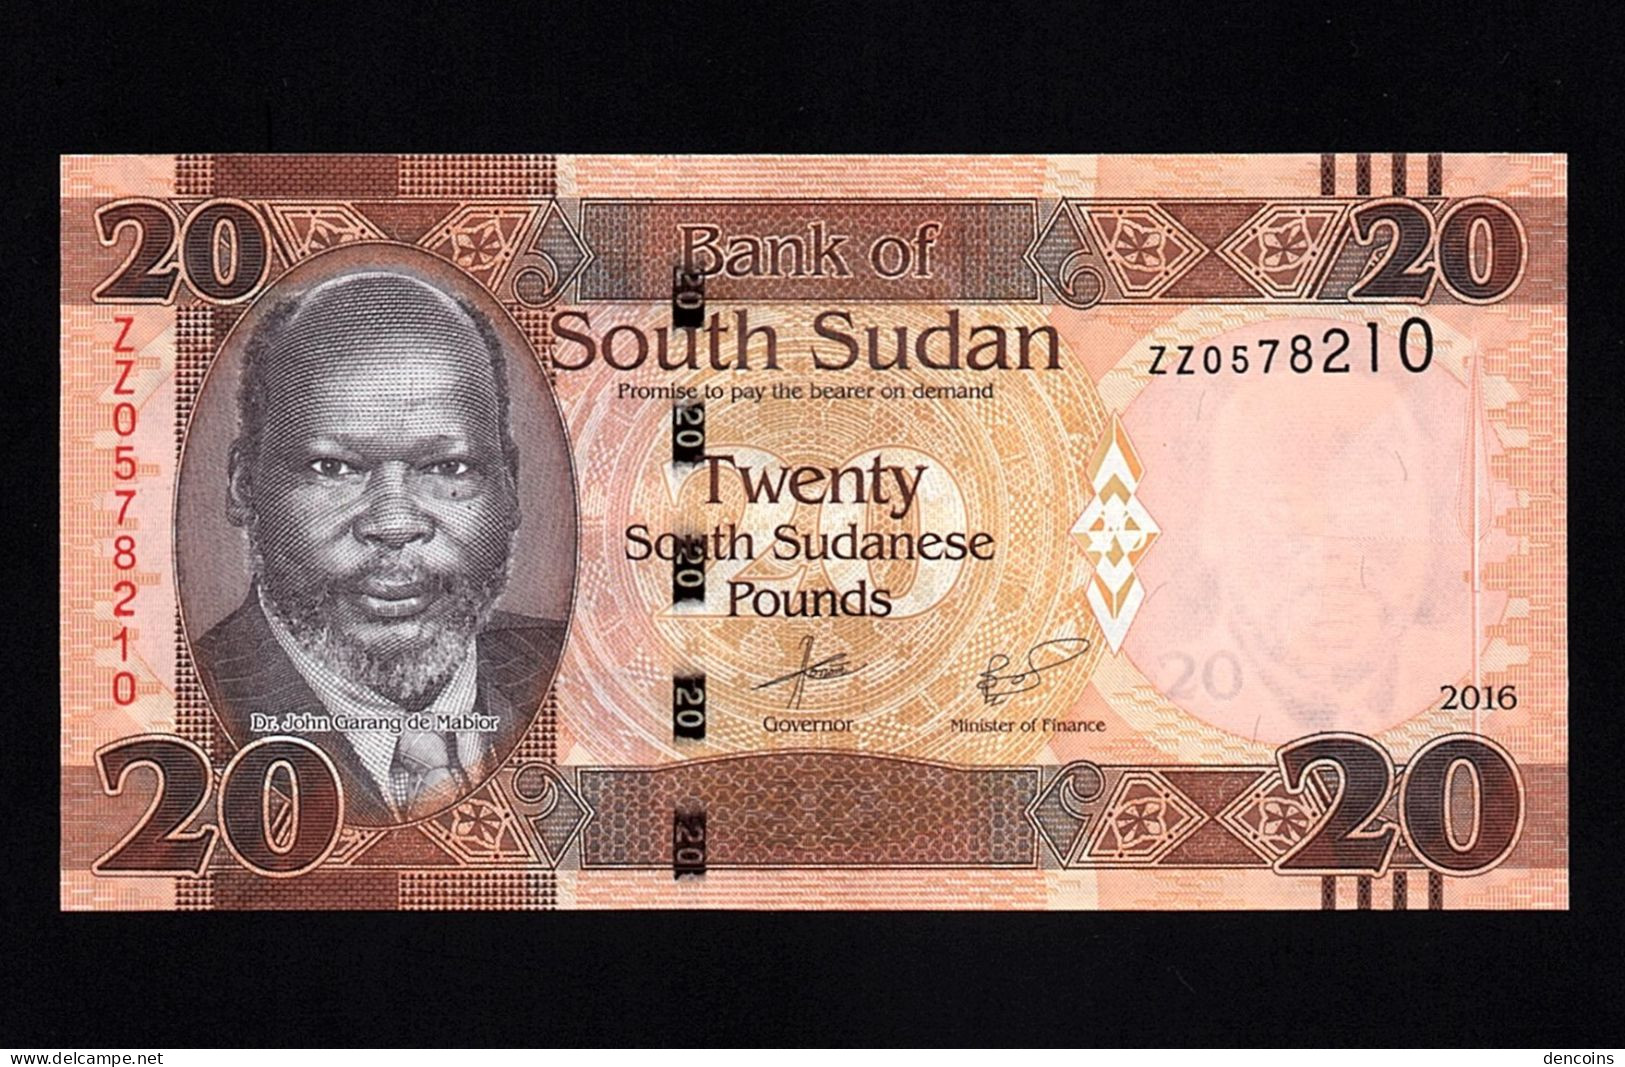 SOUTH SUDAN  P-13b  20 POUNDS  2016  -ZZ-  REPLACEMENT  UNC  NEUF  SIN CIRCULAR - South Sudan